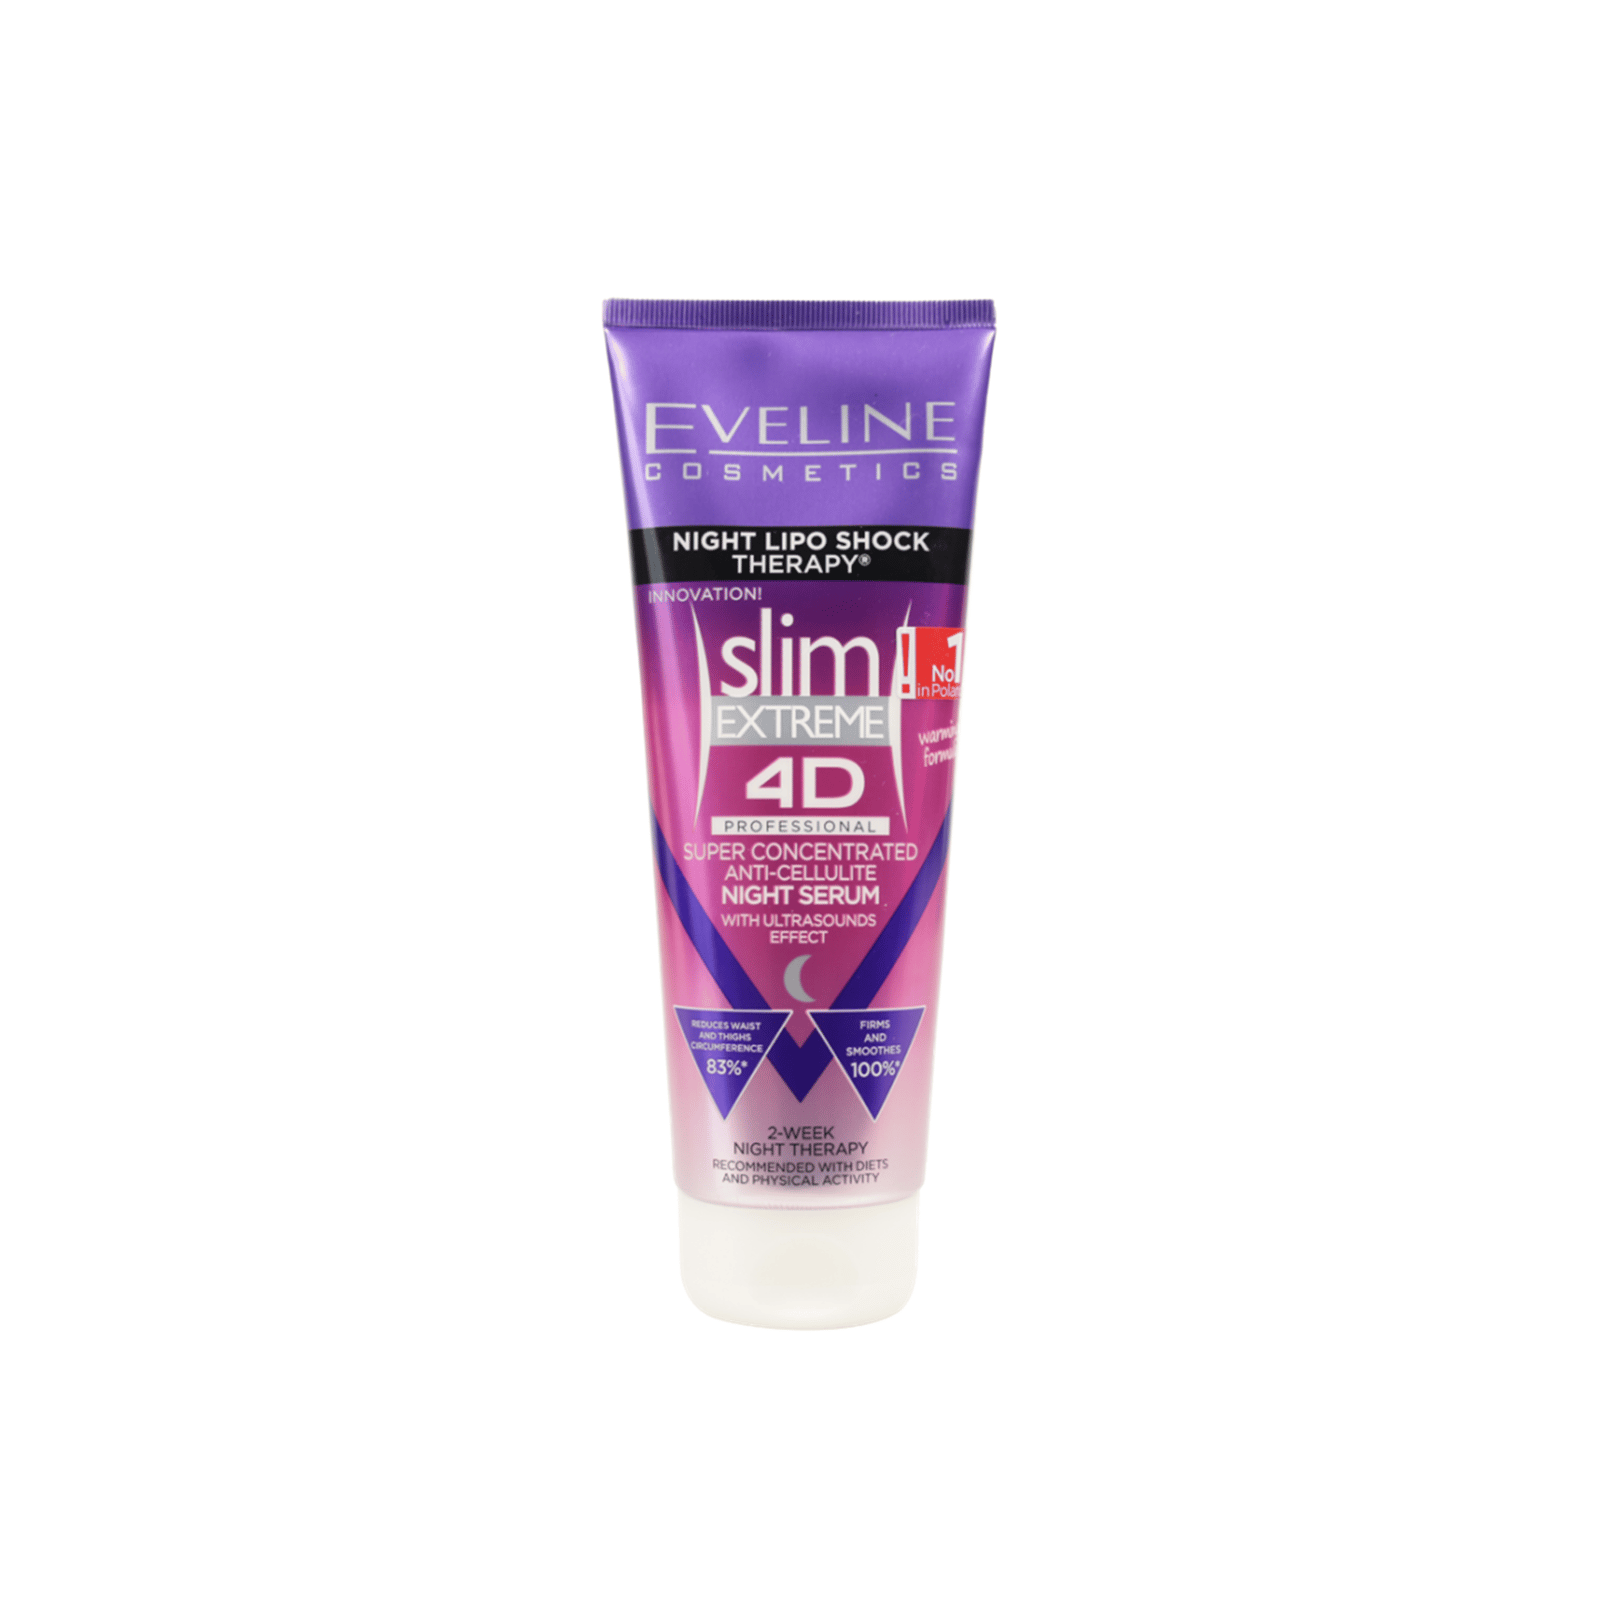 Eveline Cosmetics Slim Extreme 4D Night Lipo Shock Therapy Anti-Cellulite Serum 250ml (8.8 fl oz)